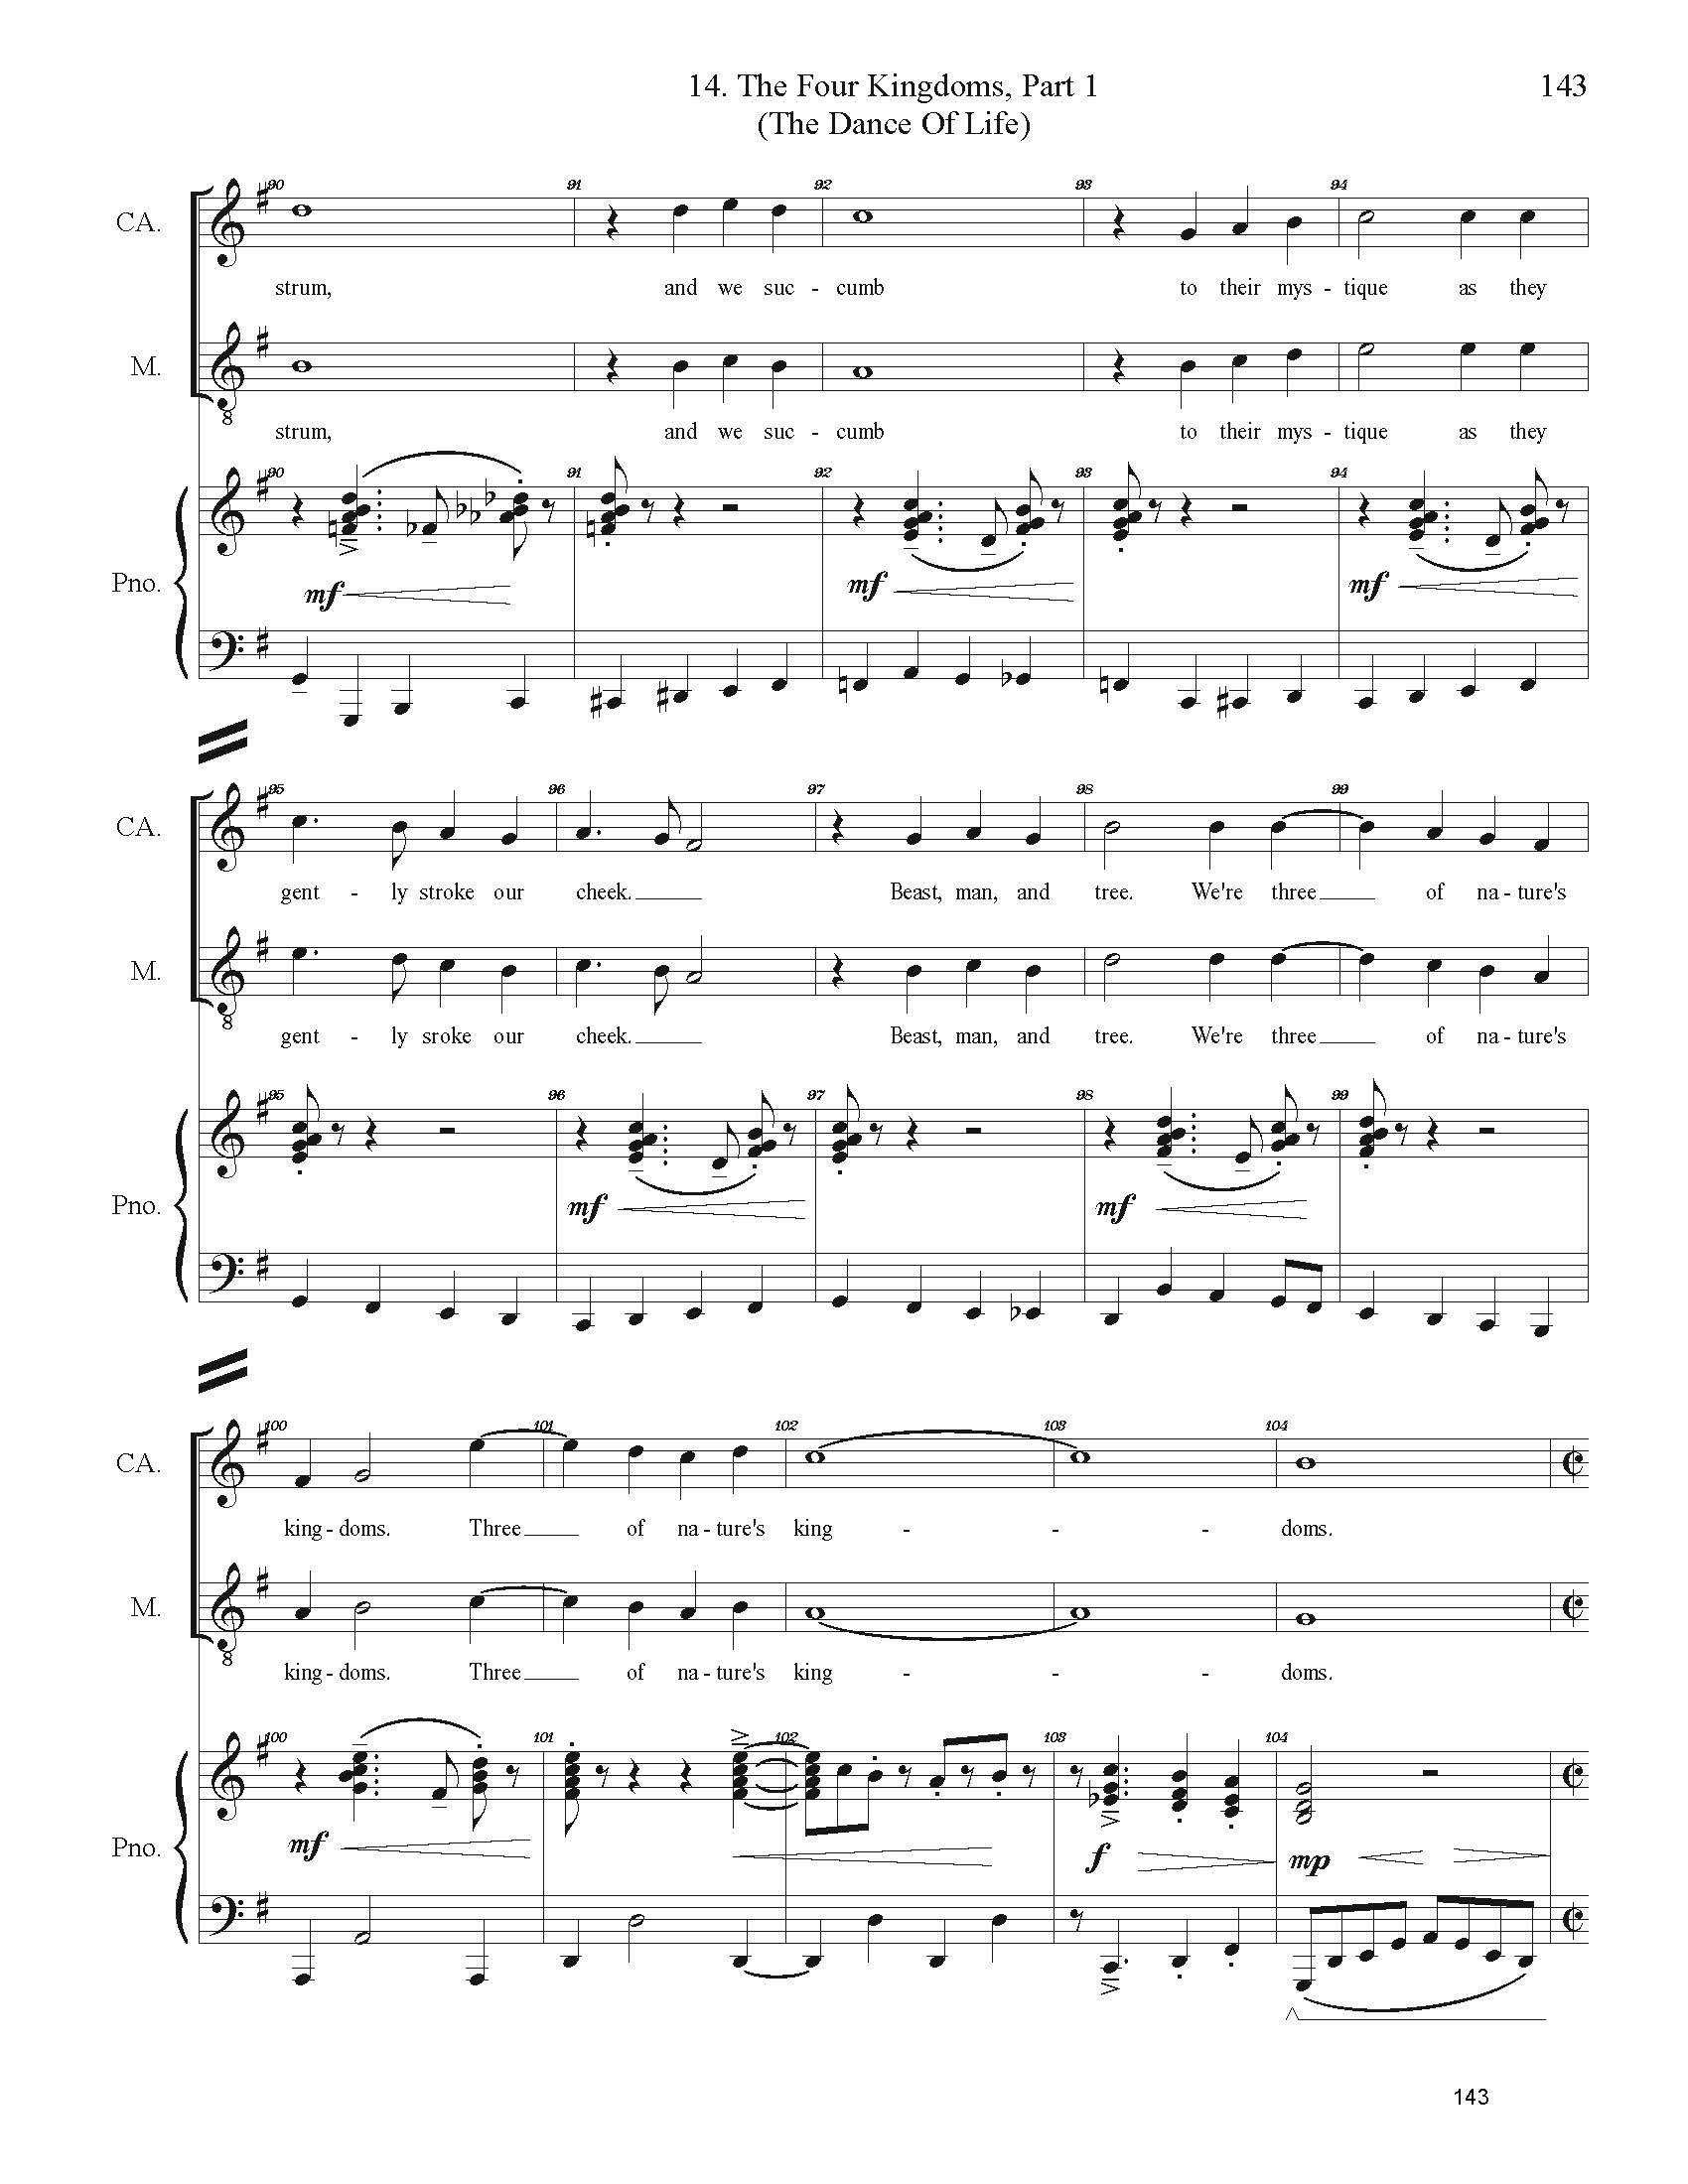 FULL PIANO VOCAL SCORE DRAFT 1 - Score_Page_143.jpg